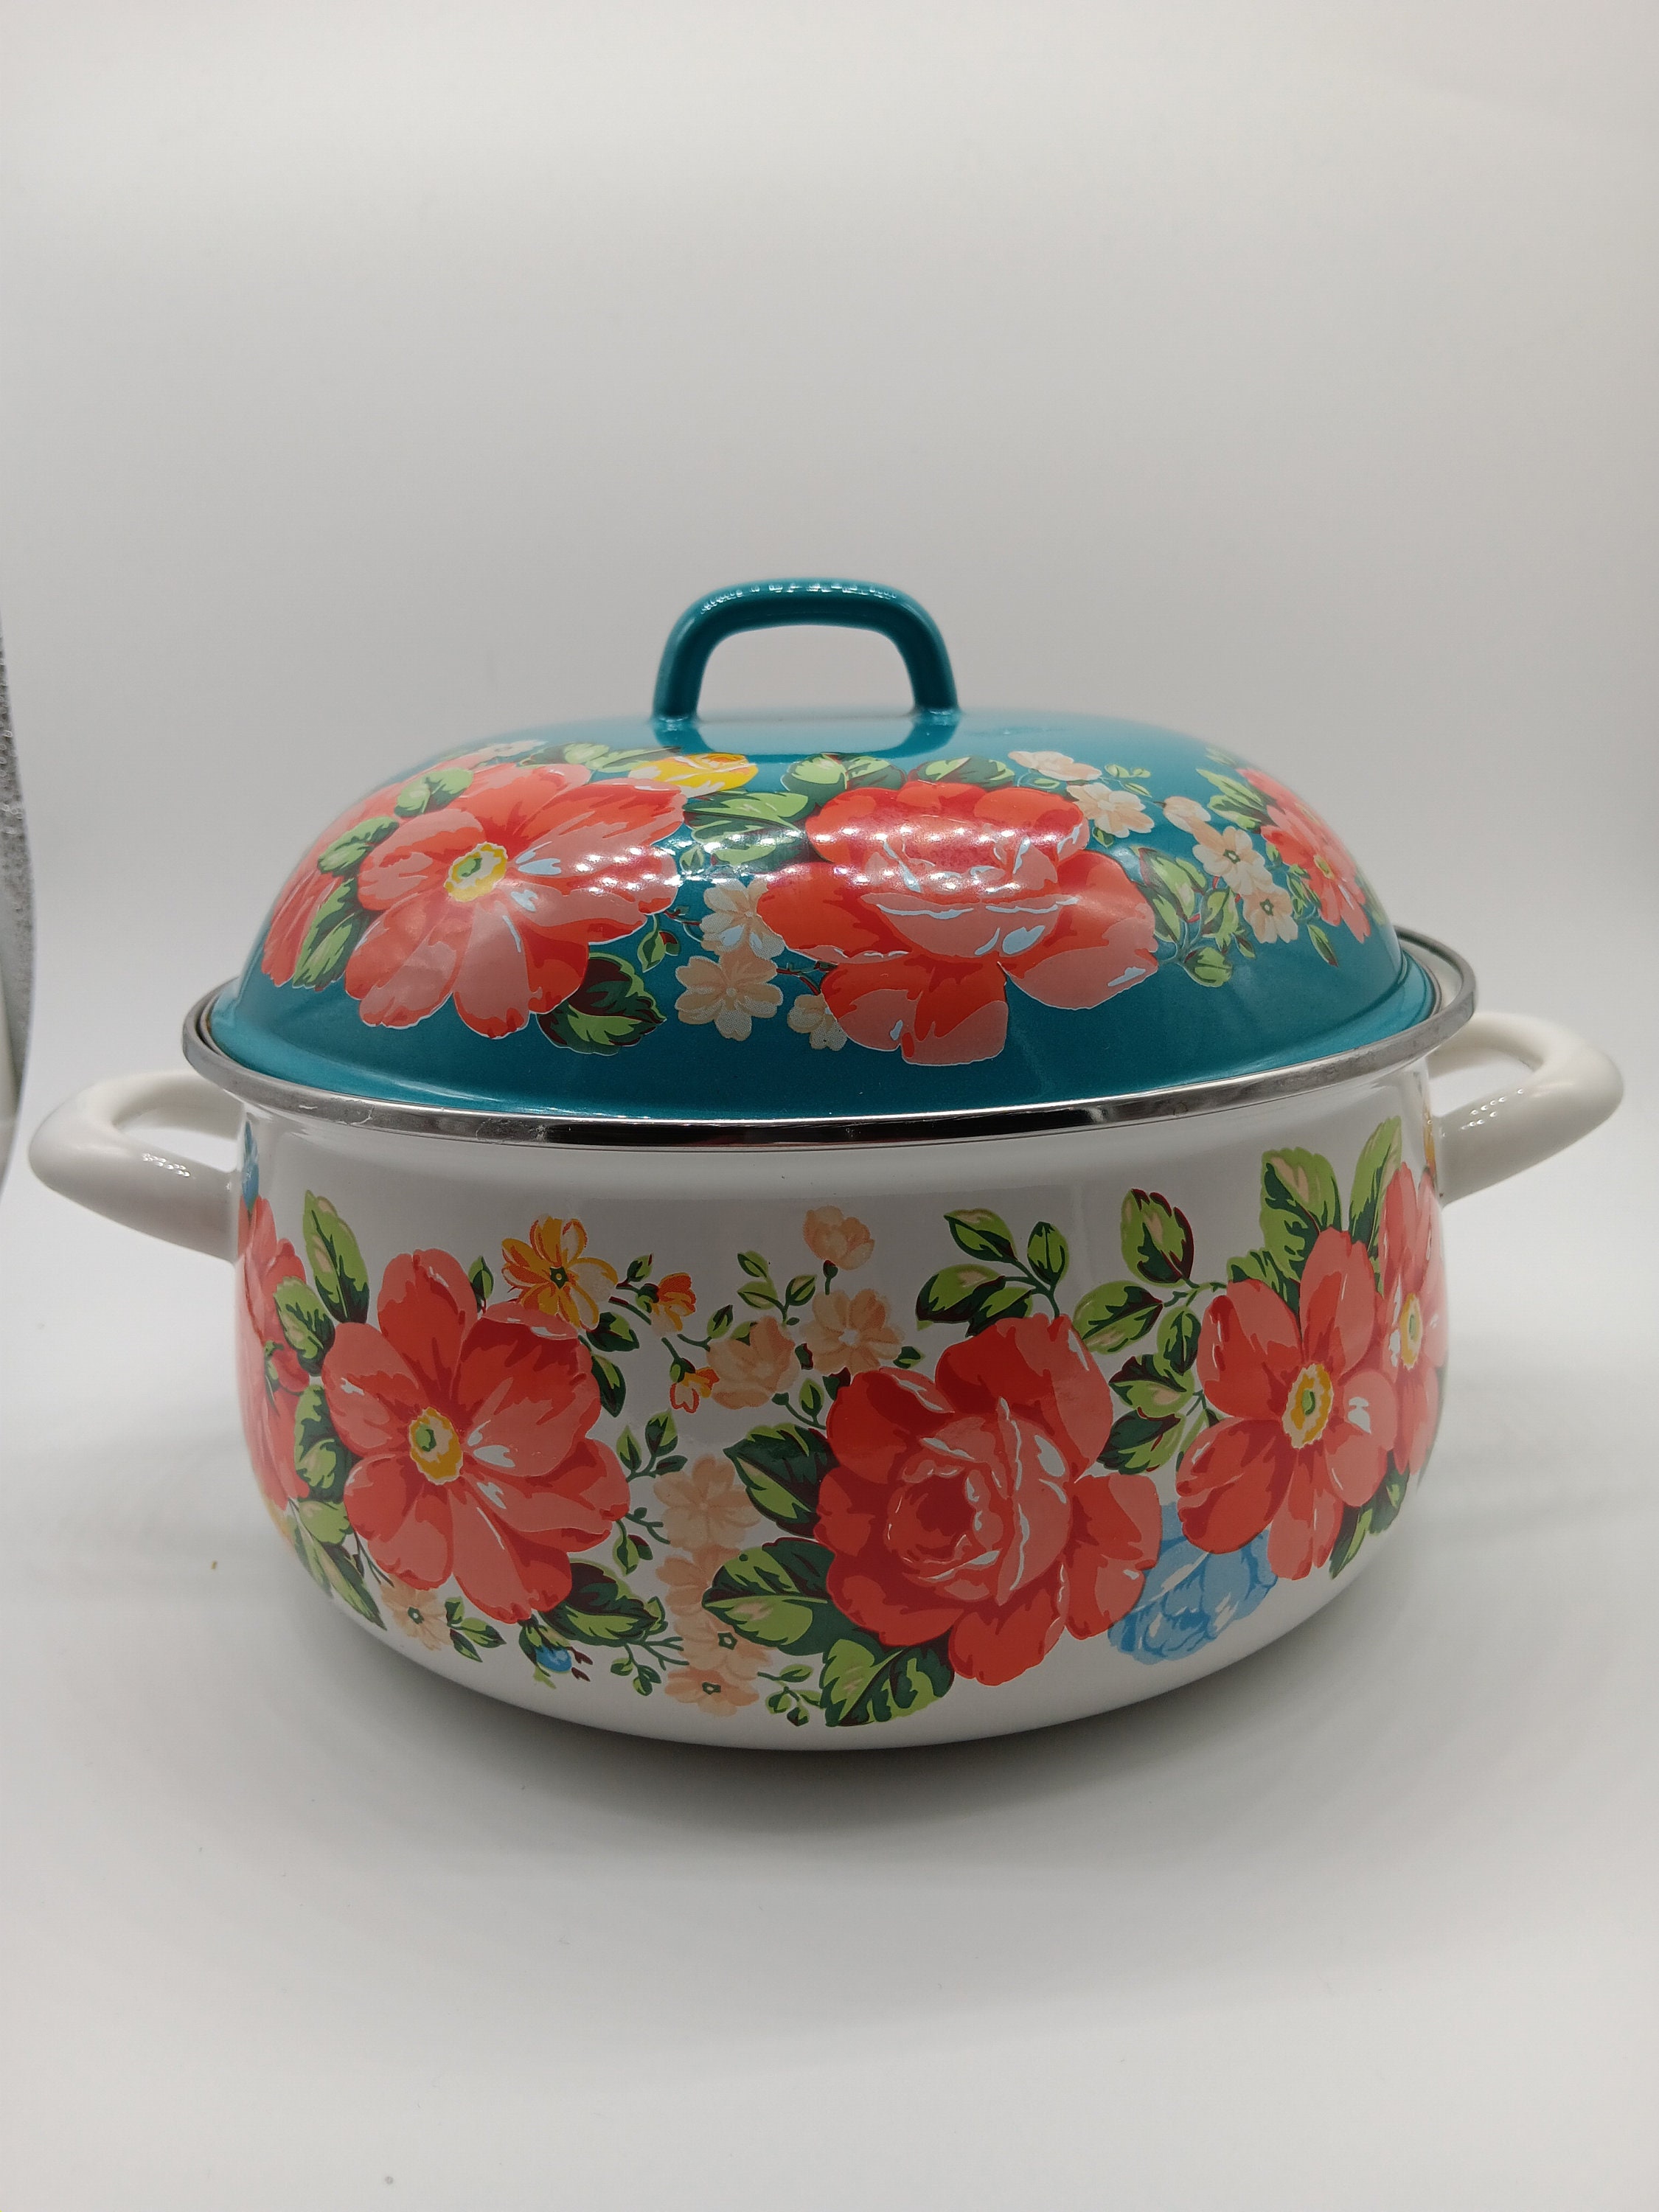 The Pioneer Woman Vintage Floral 4-Quart Dutch Oven